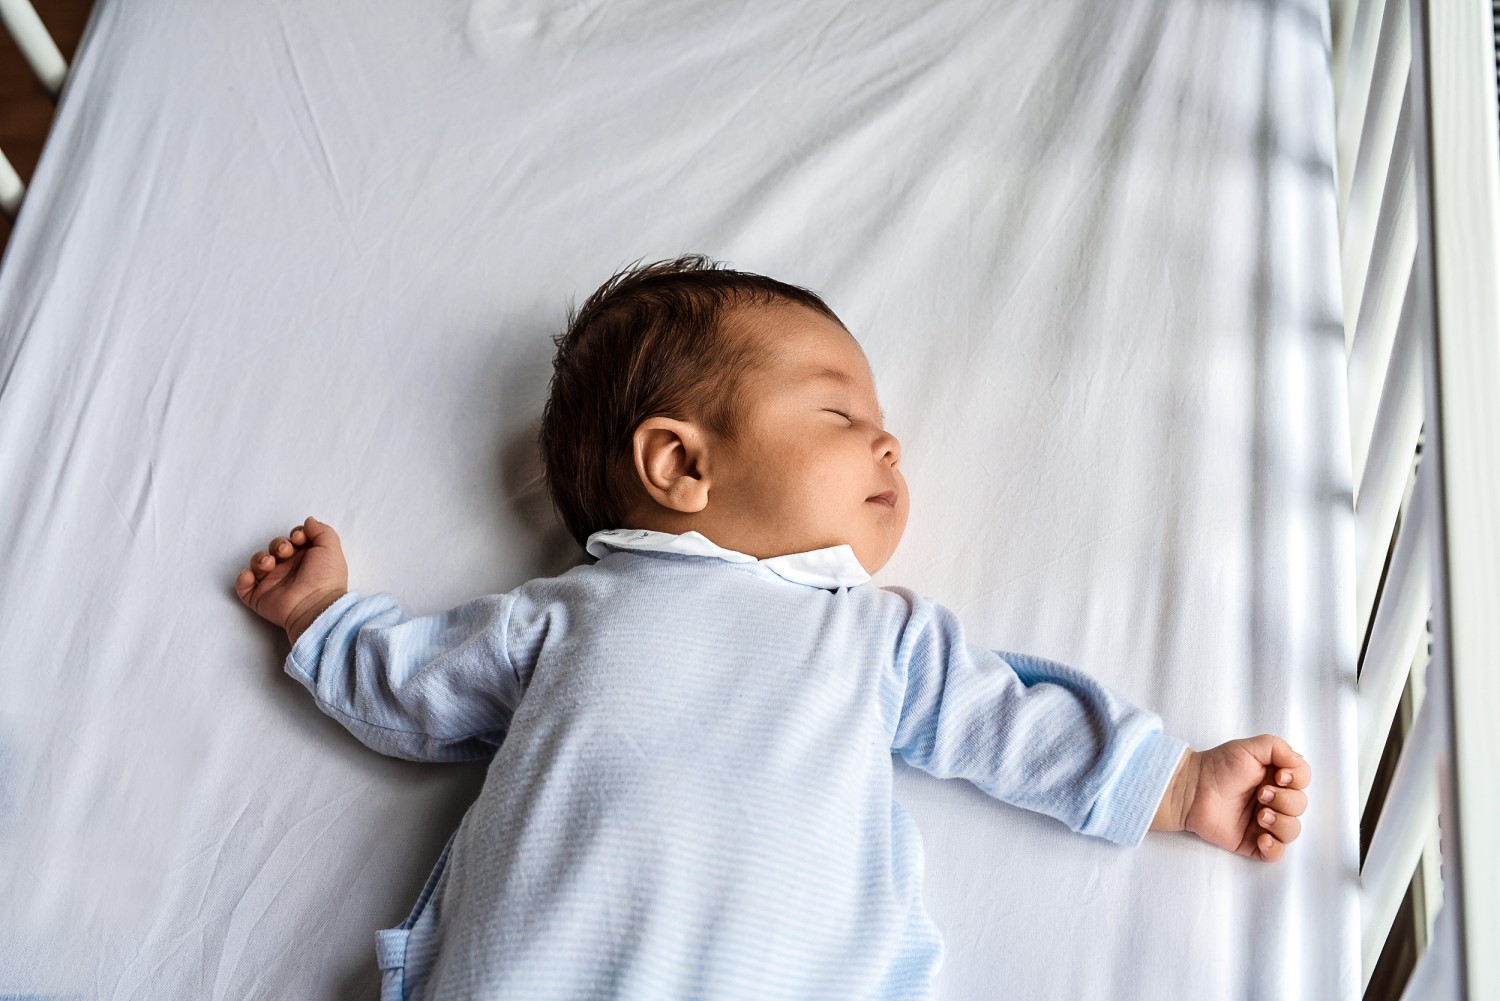 Infant head-shaping pillows can kill babies, FDA warns